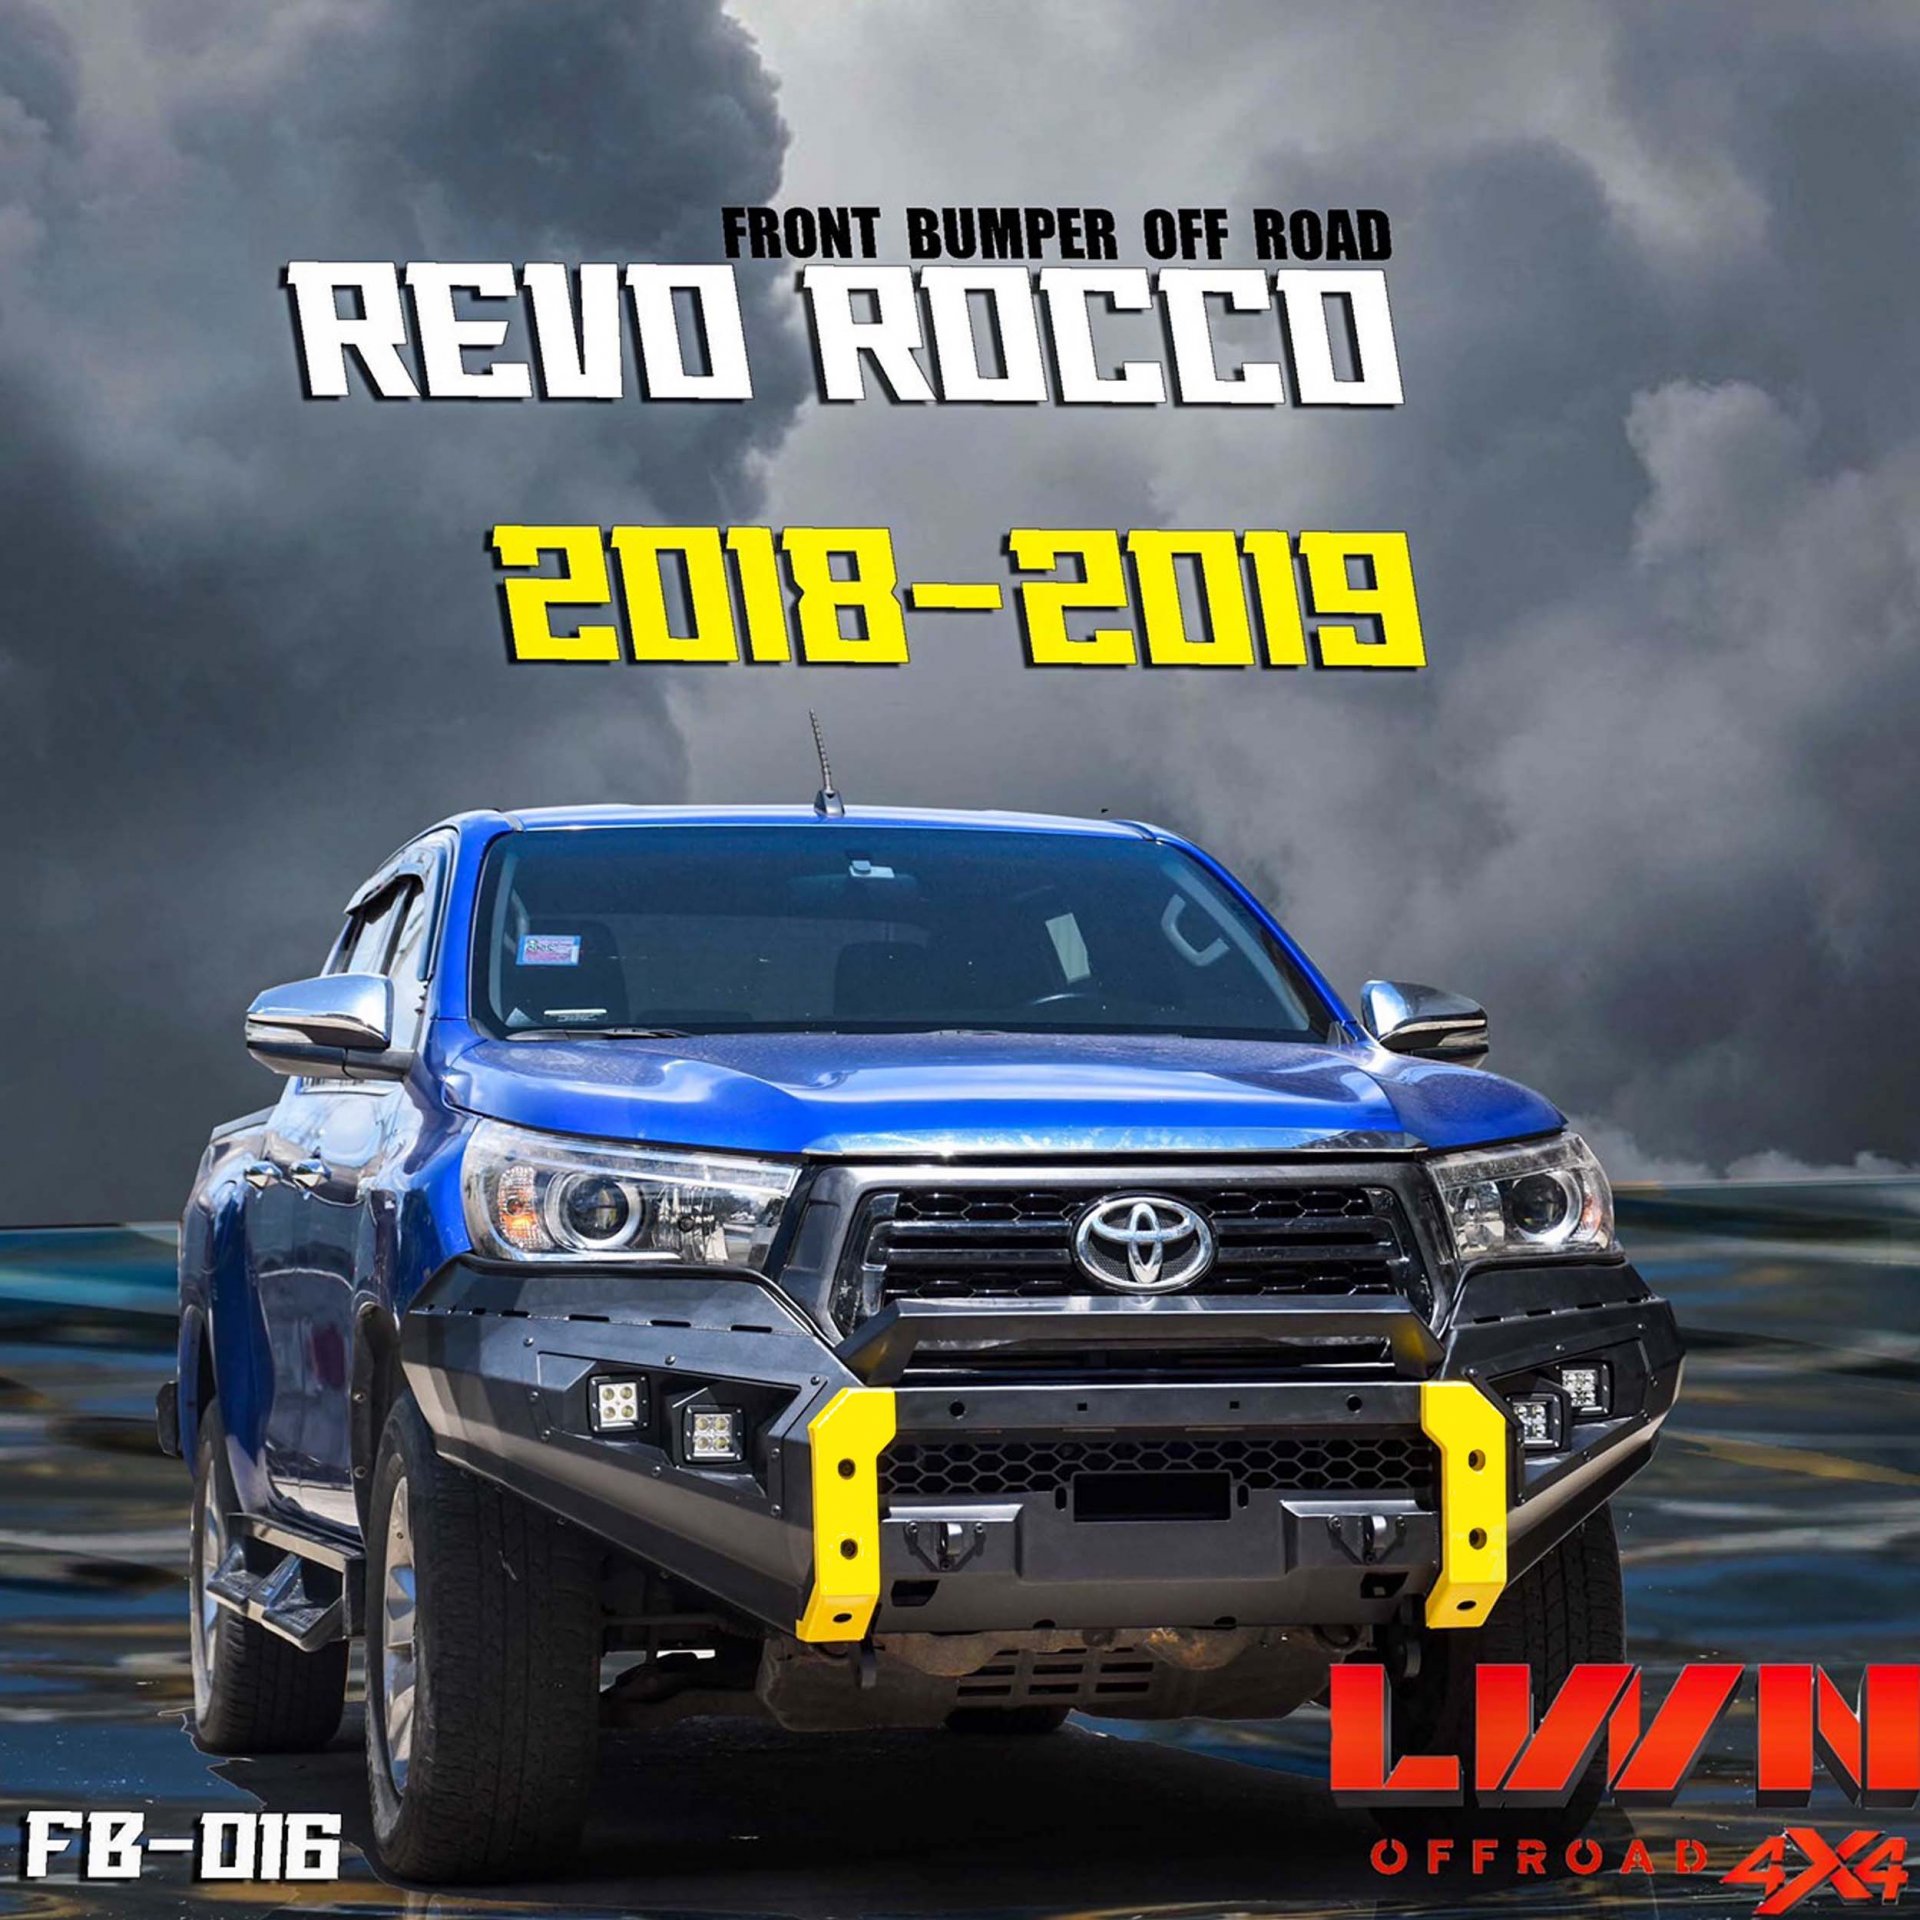 FB-016 : กันชนหน้า Revo Rocco 2018